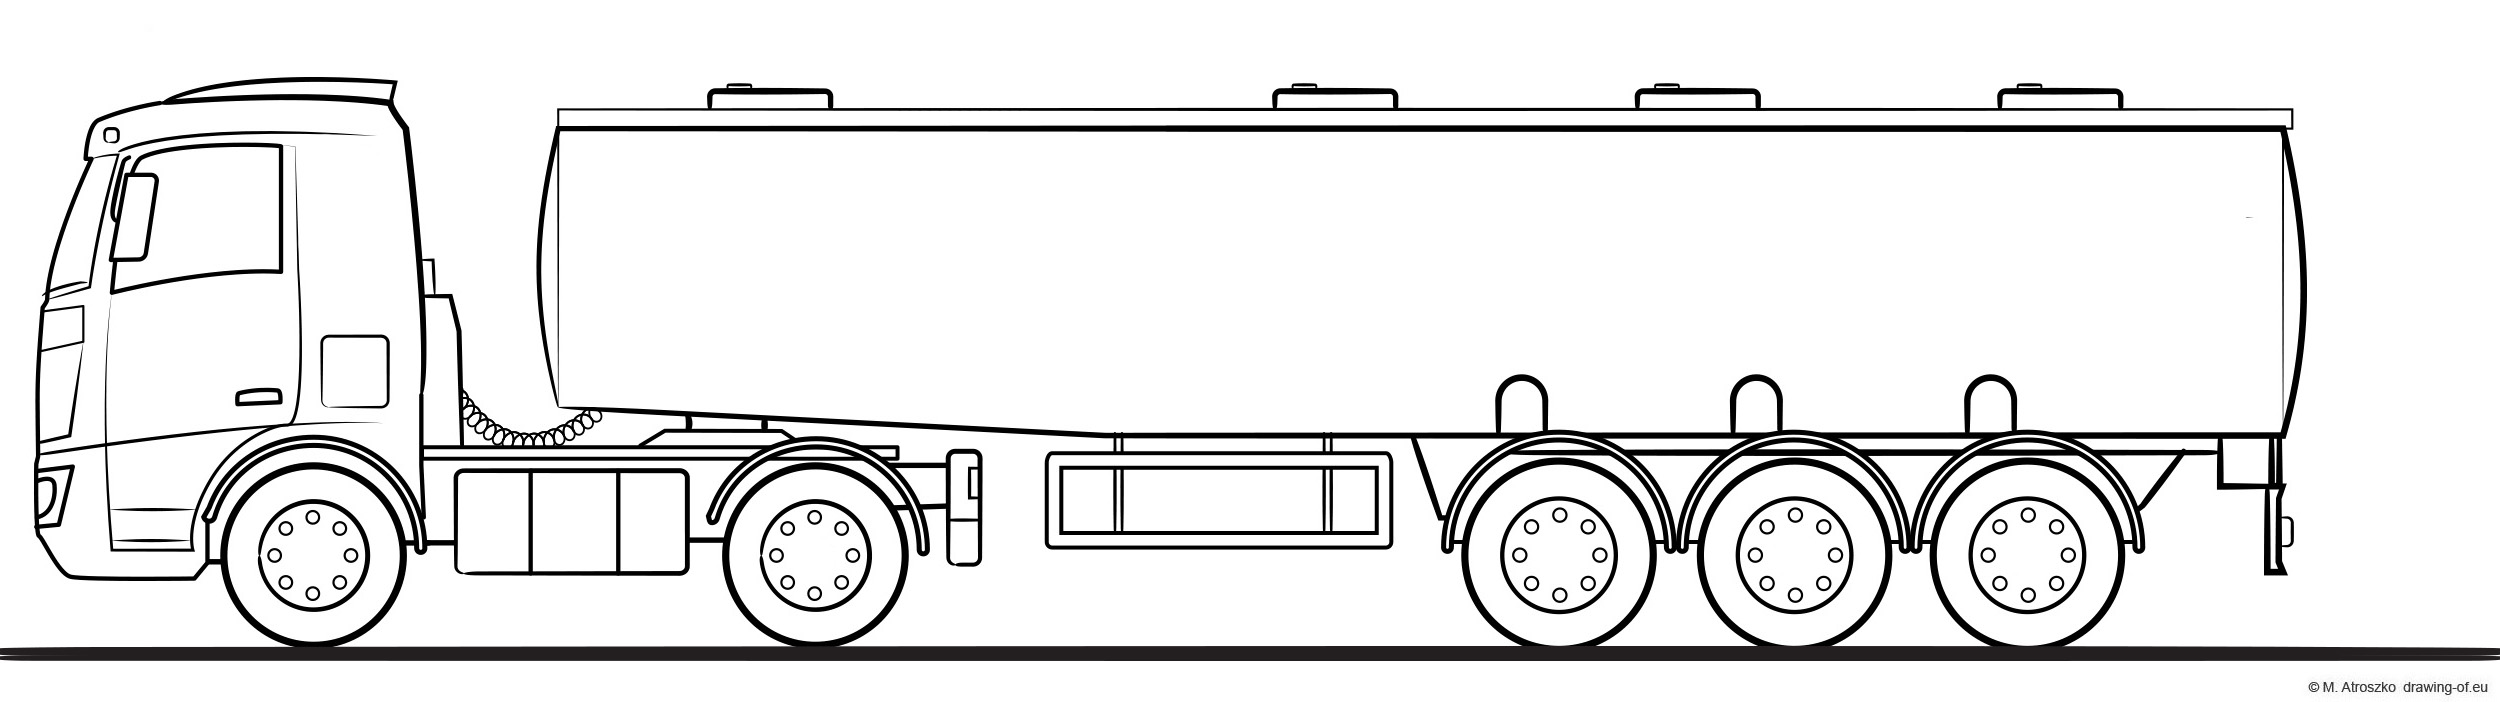 tank truck illustration